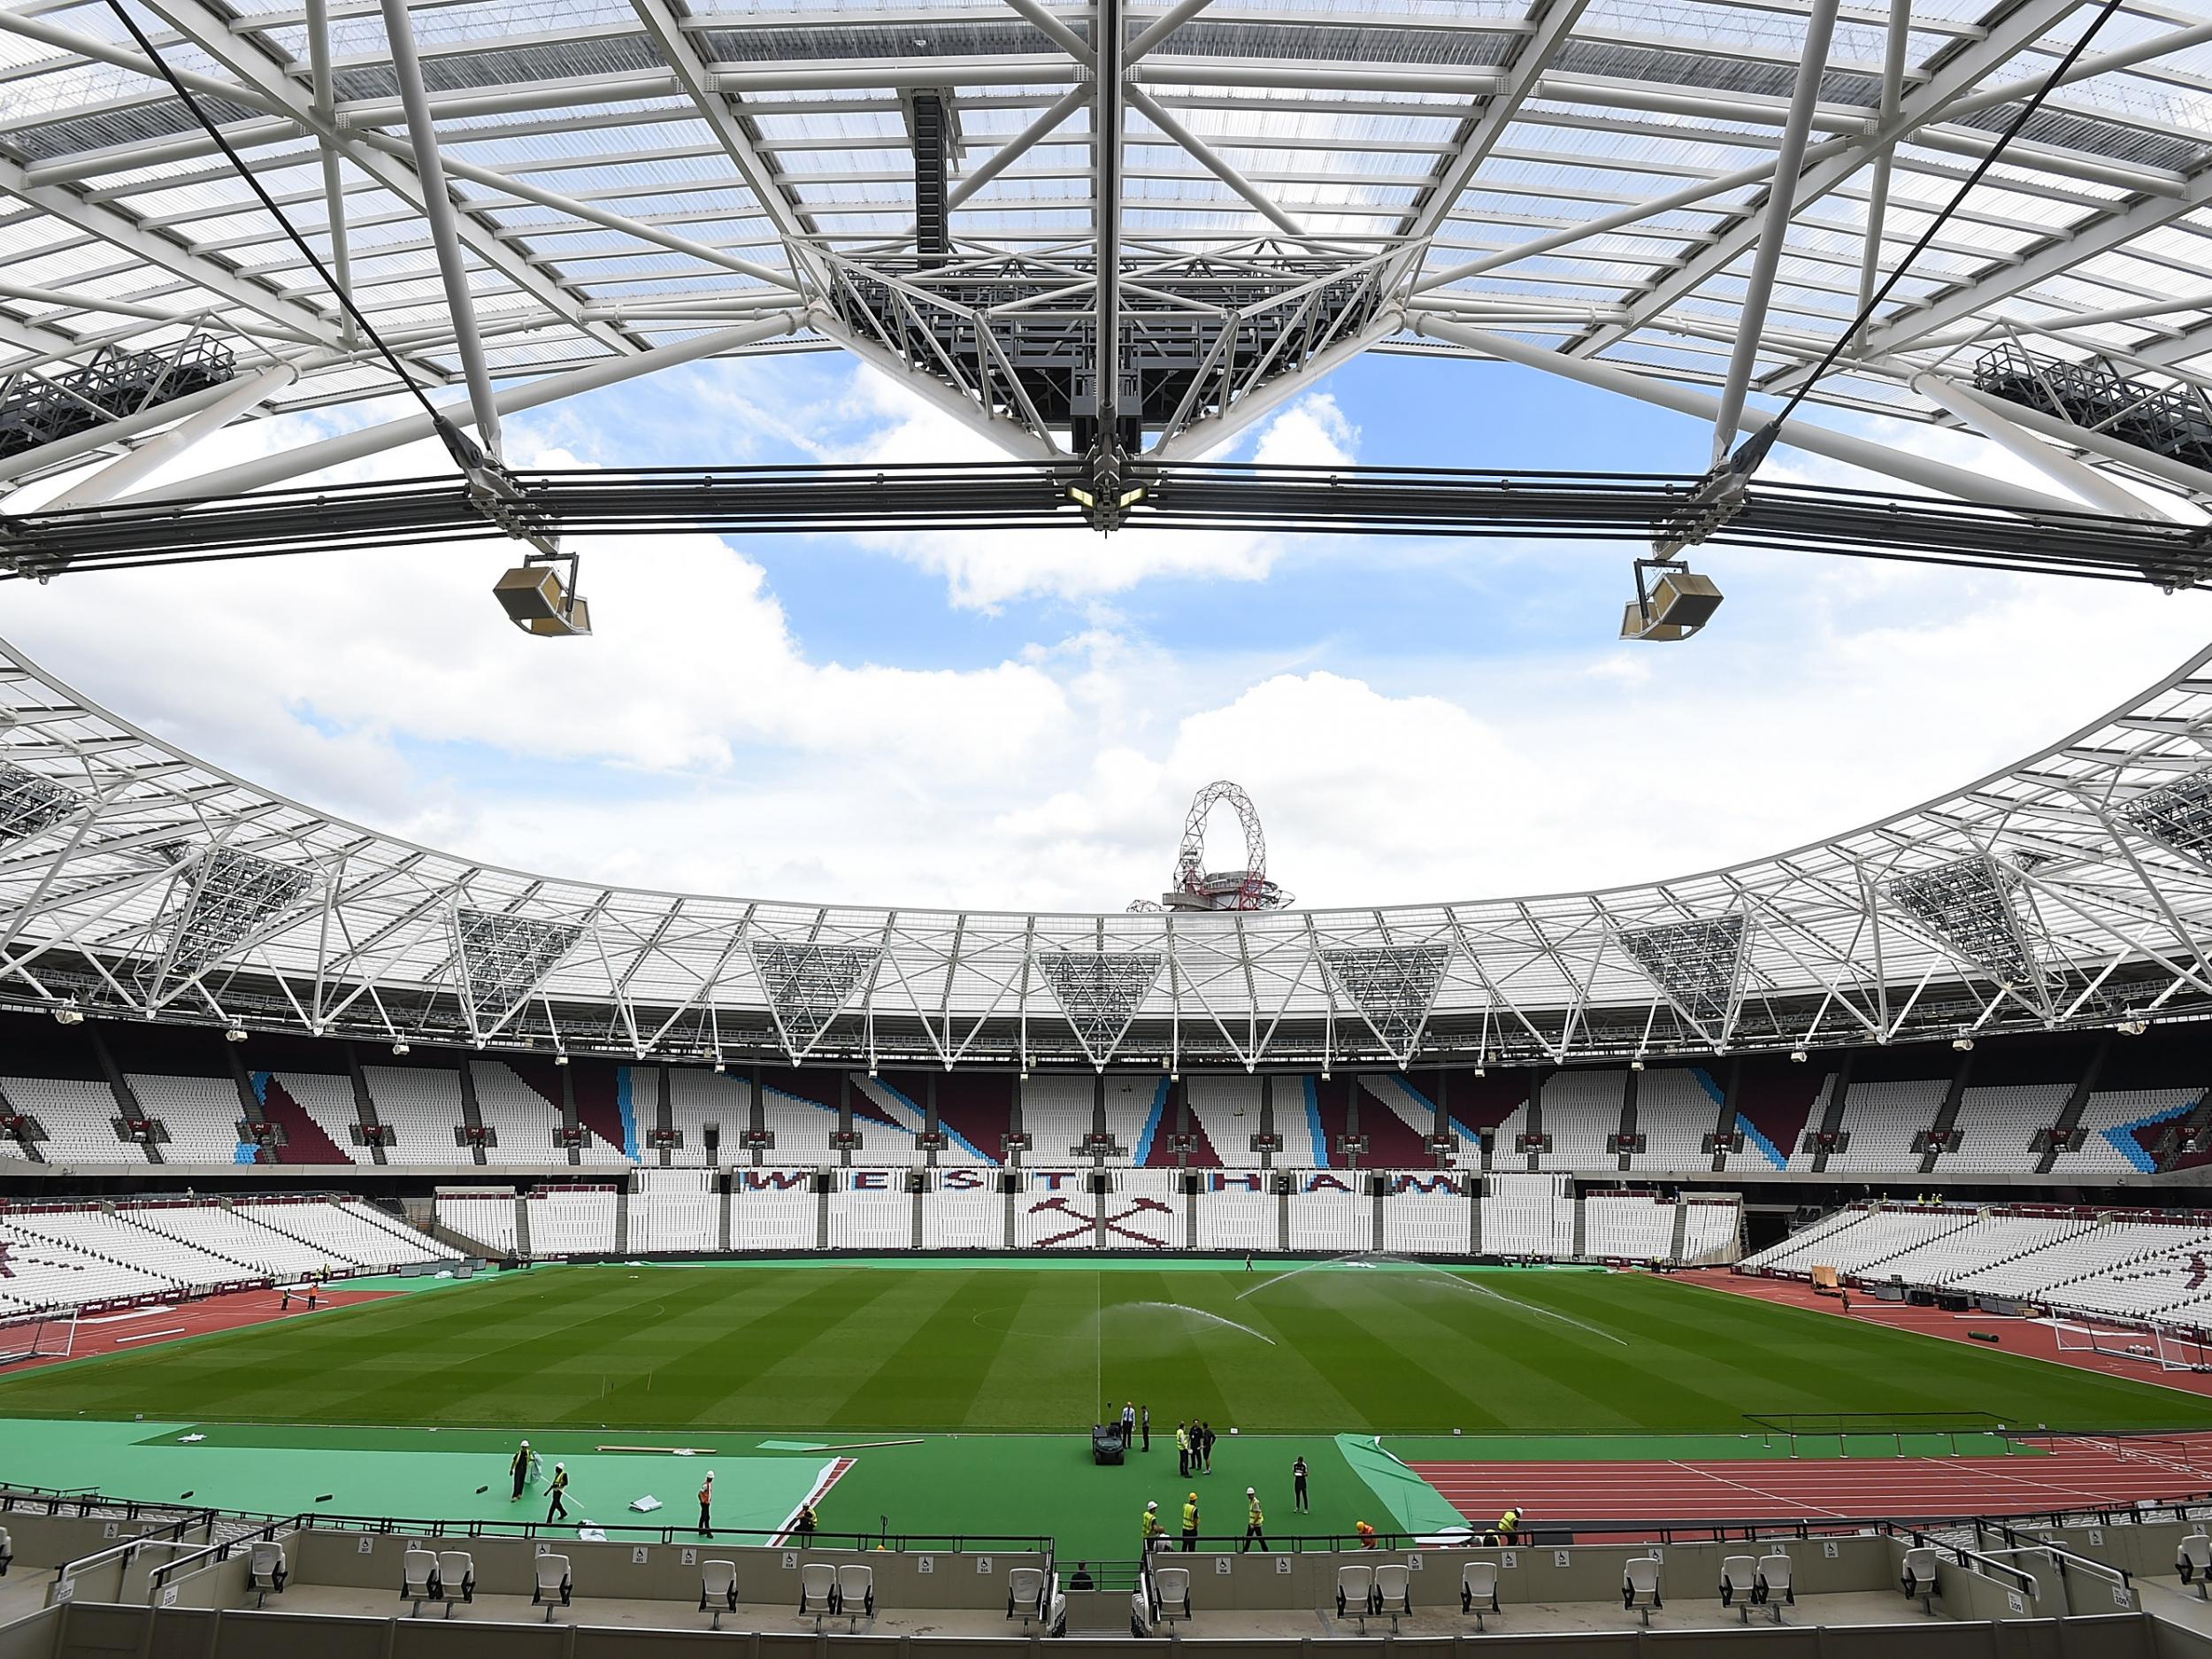 West Hams London Stadium Home On Stadium Of The Year Award Shortlist